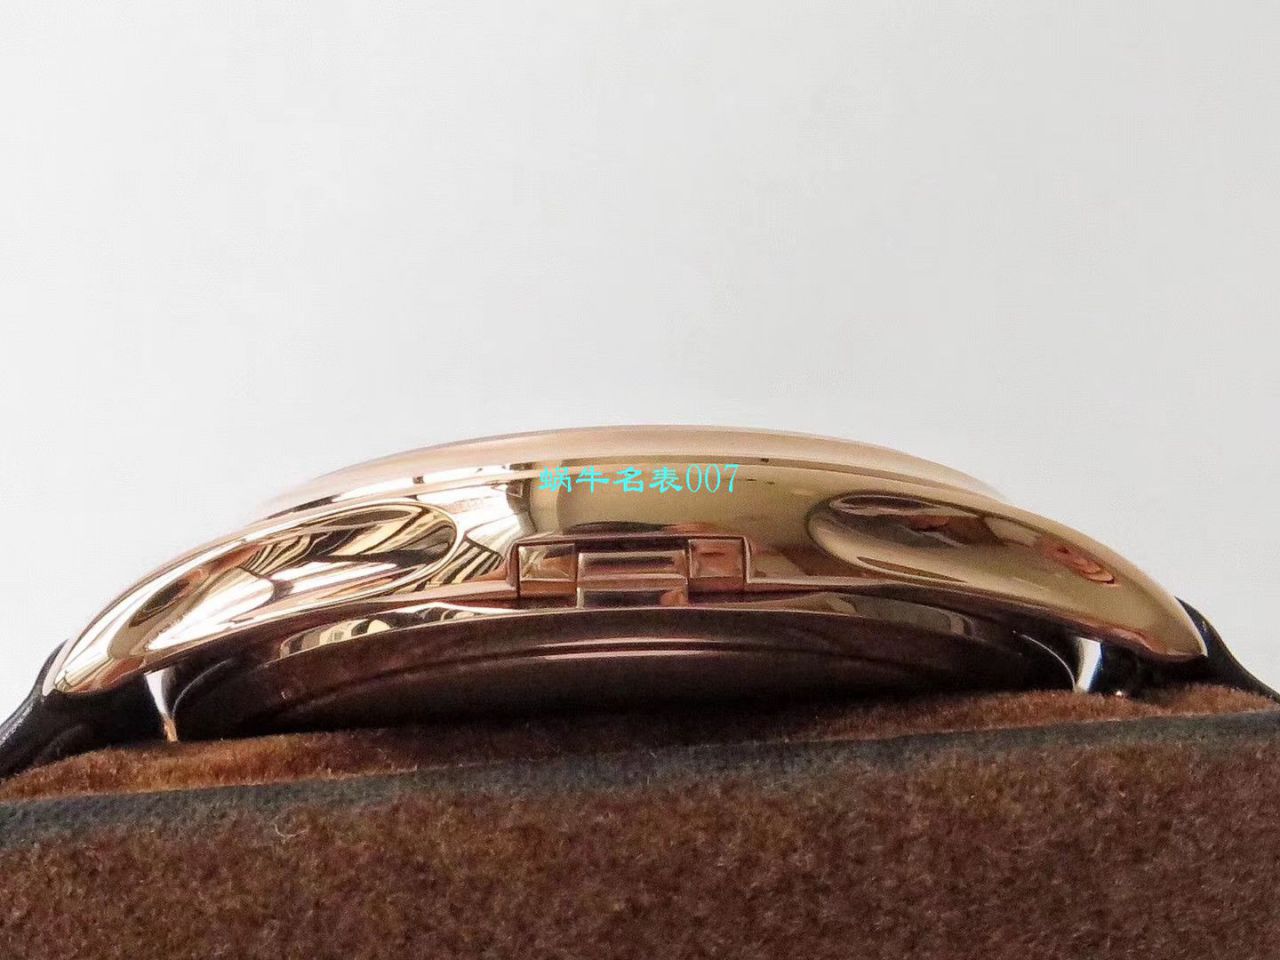 【ZF厂PATEK PHILIPPE复刻手表】百达翡丽古典表系列5227R-001腕表 / BD279